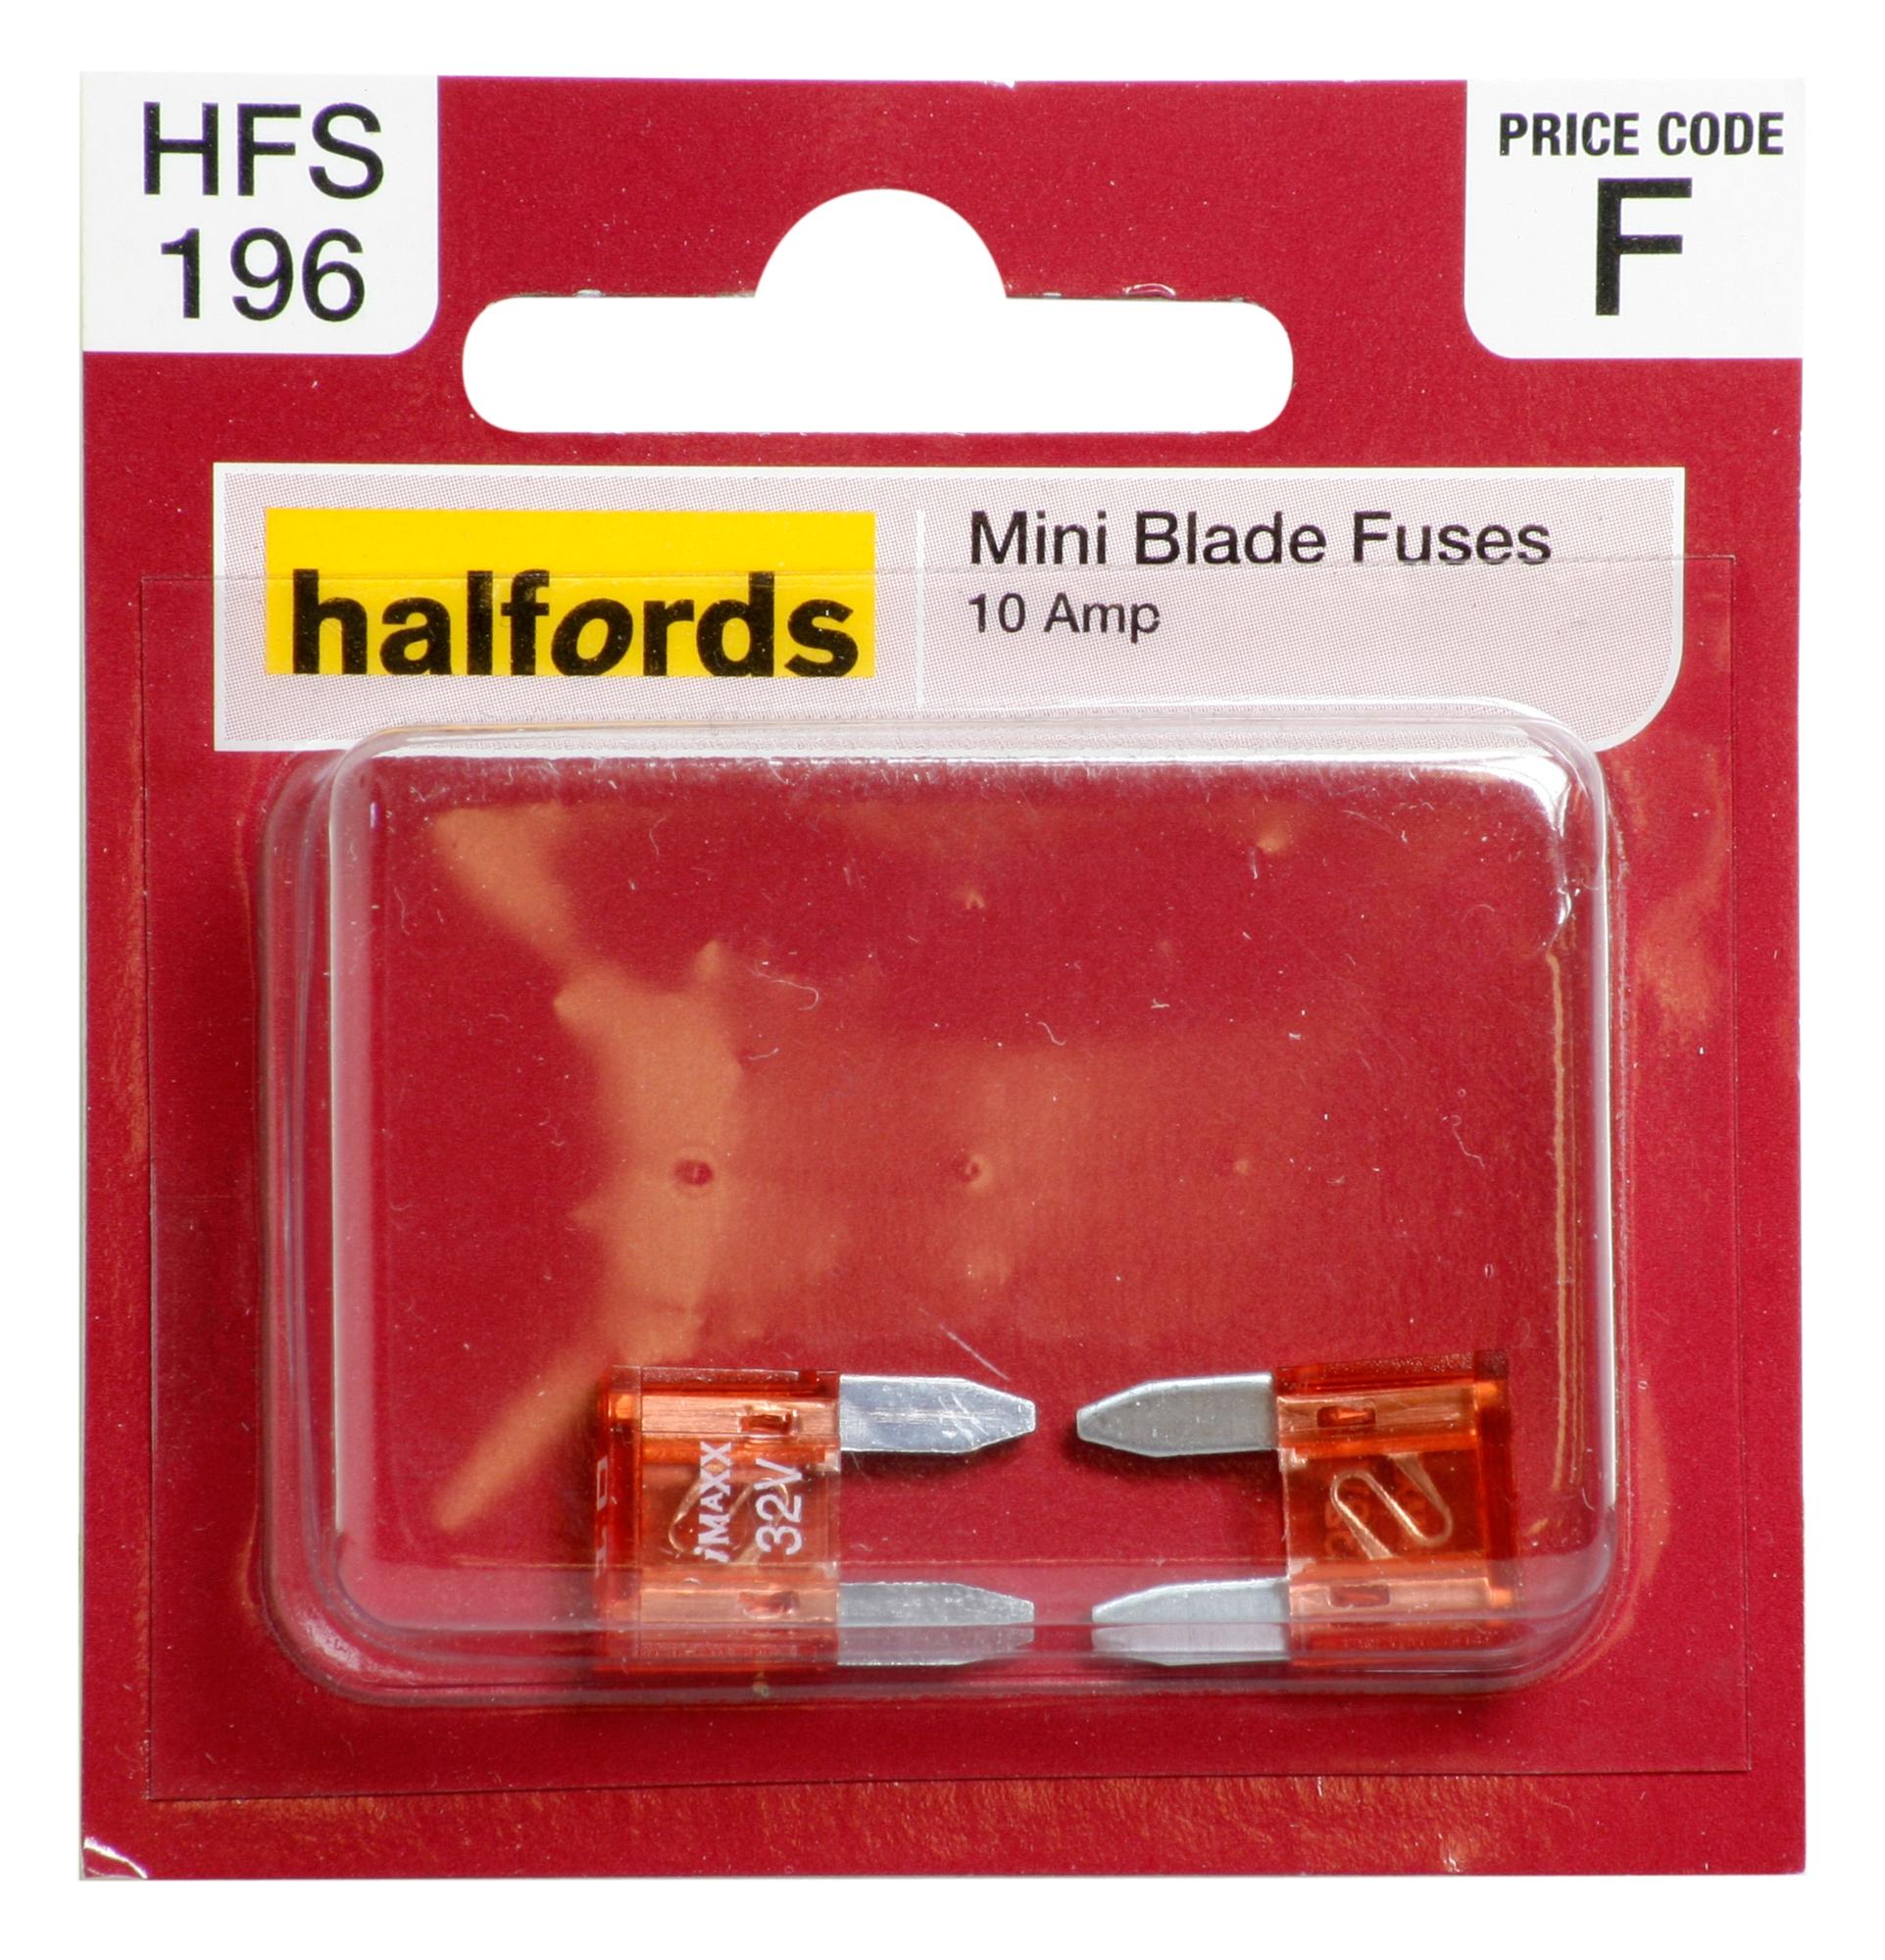 Halfords Mini Blade Fuses 10 Amp (Hfs196)